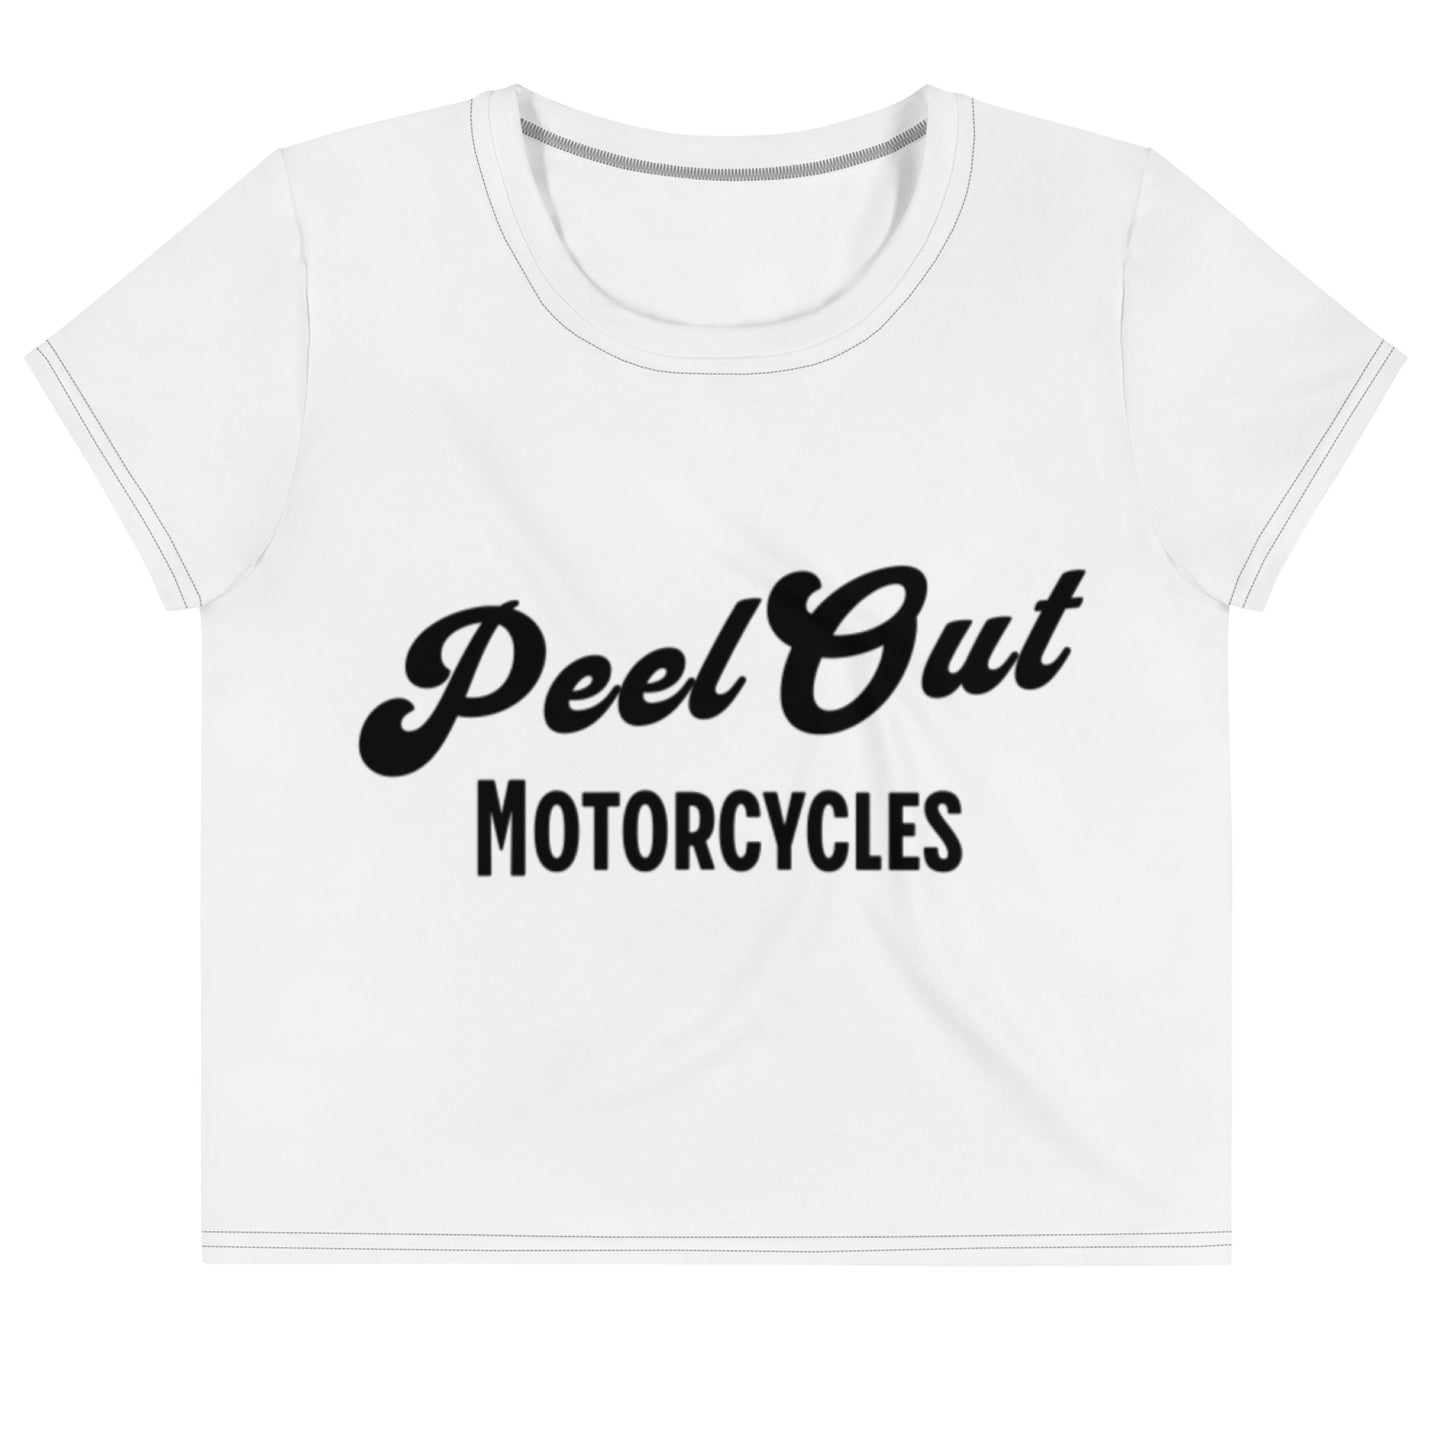 Peel Out Motorcycles Crop tee - White